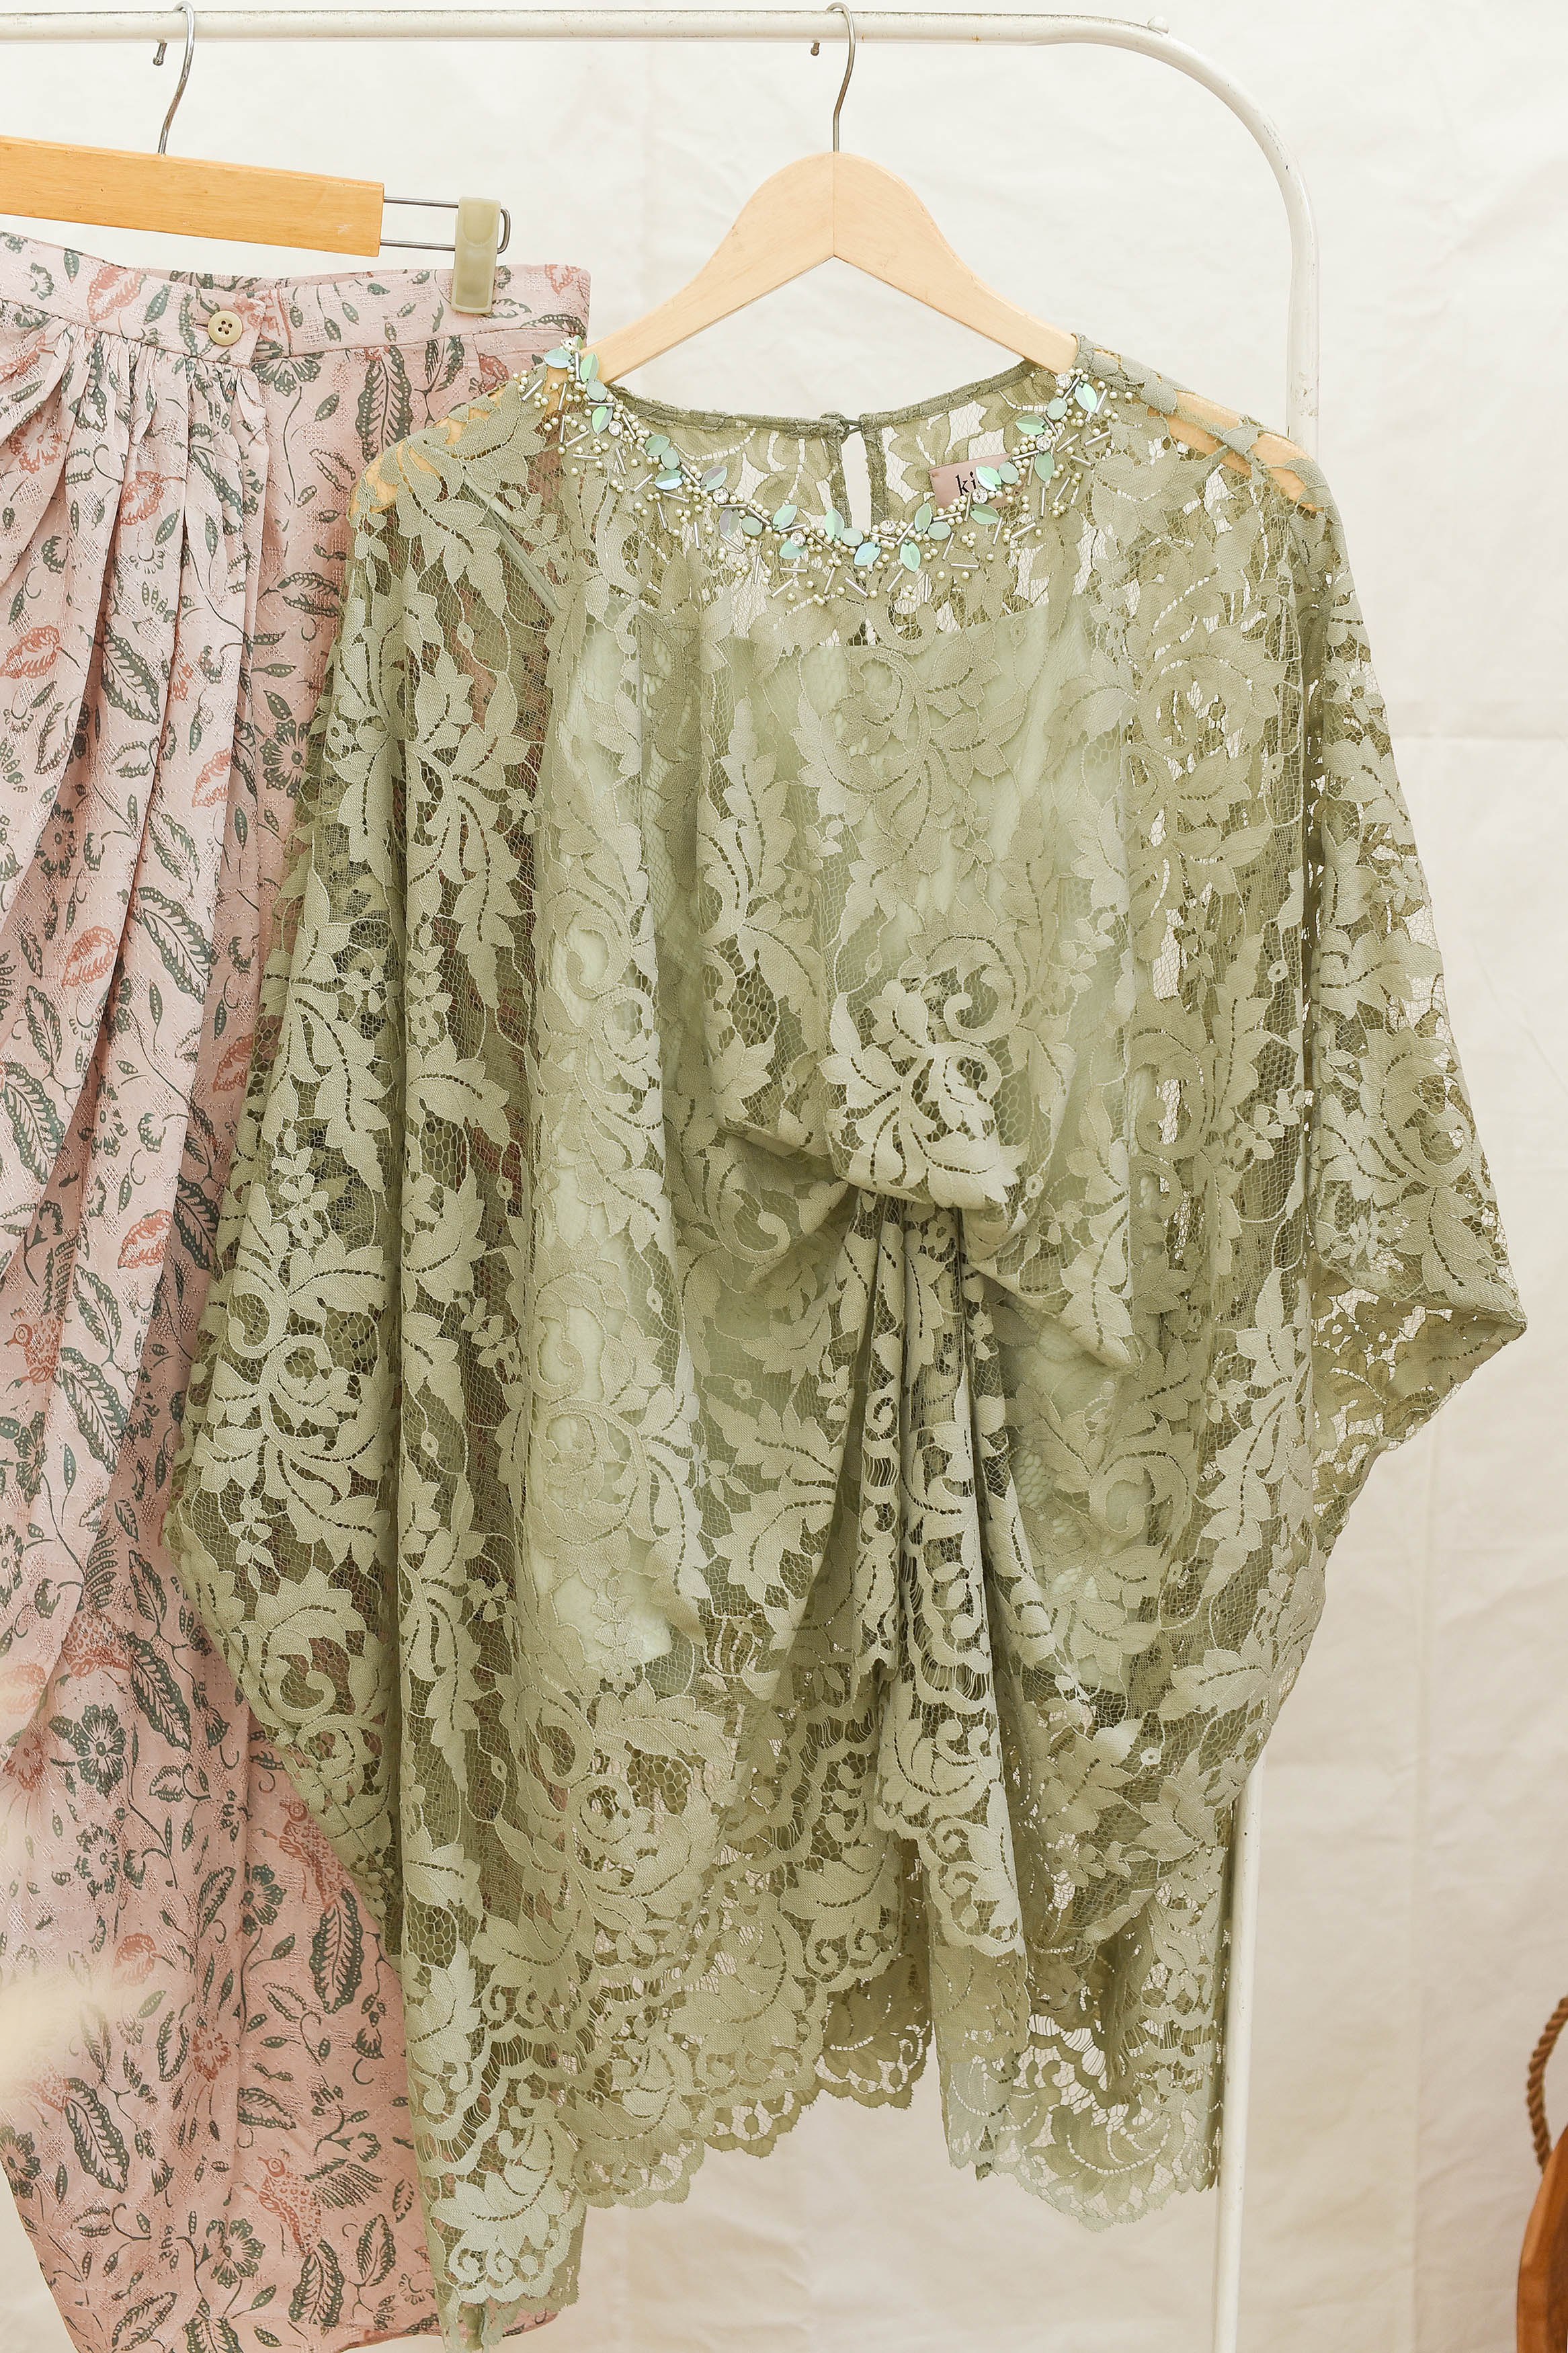 Melati Green Modern Kebaya and Green Baju Kurung Modern Baju Raya 2020 - By Kiara Official